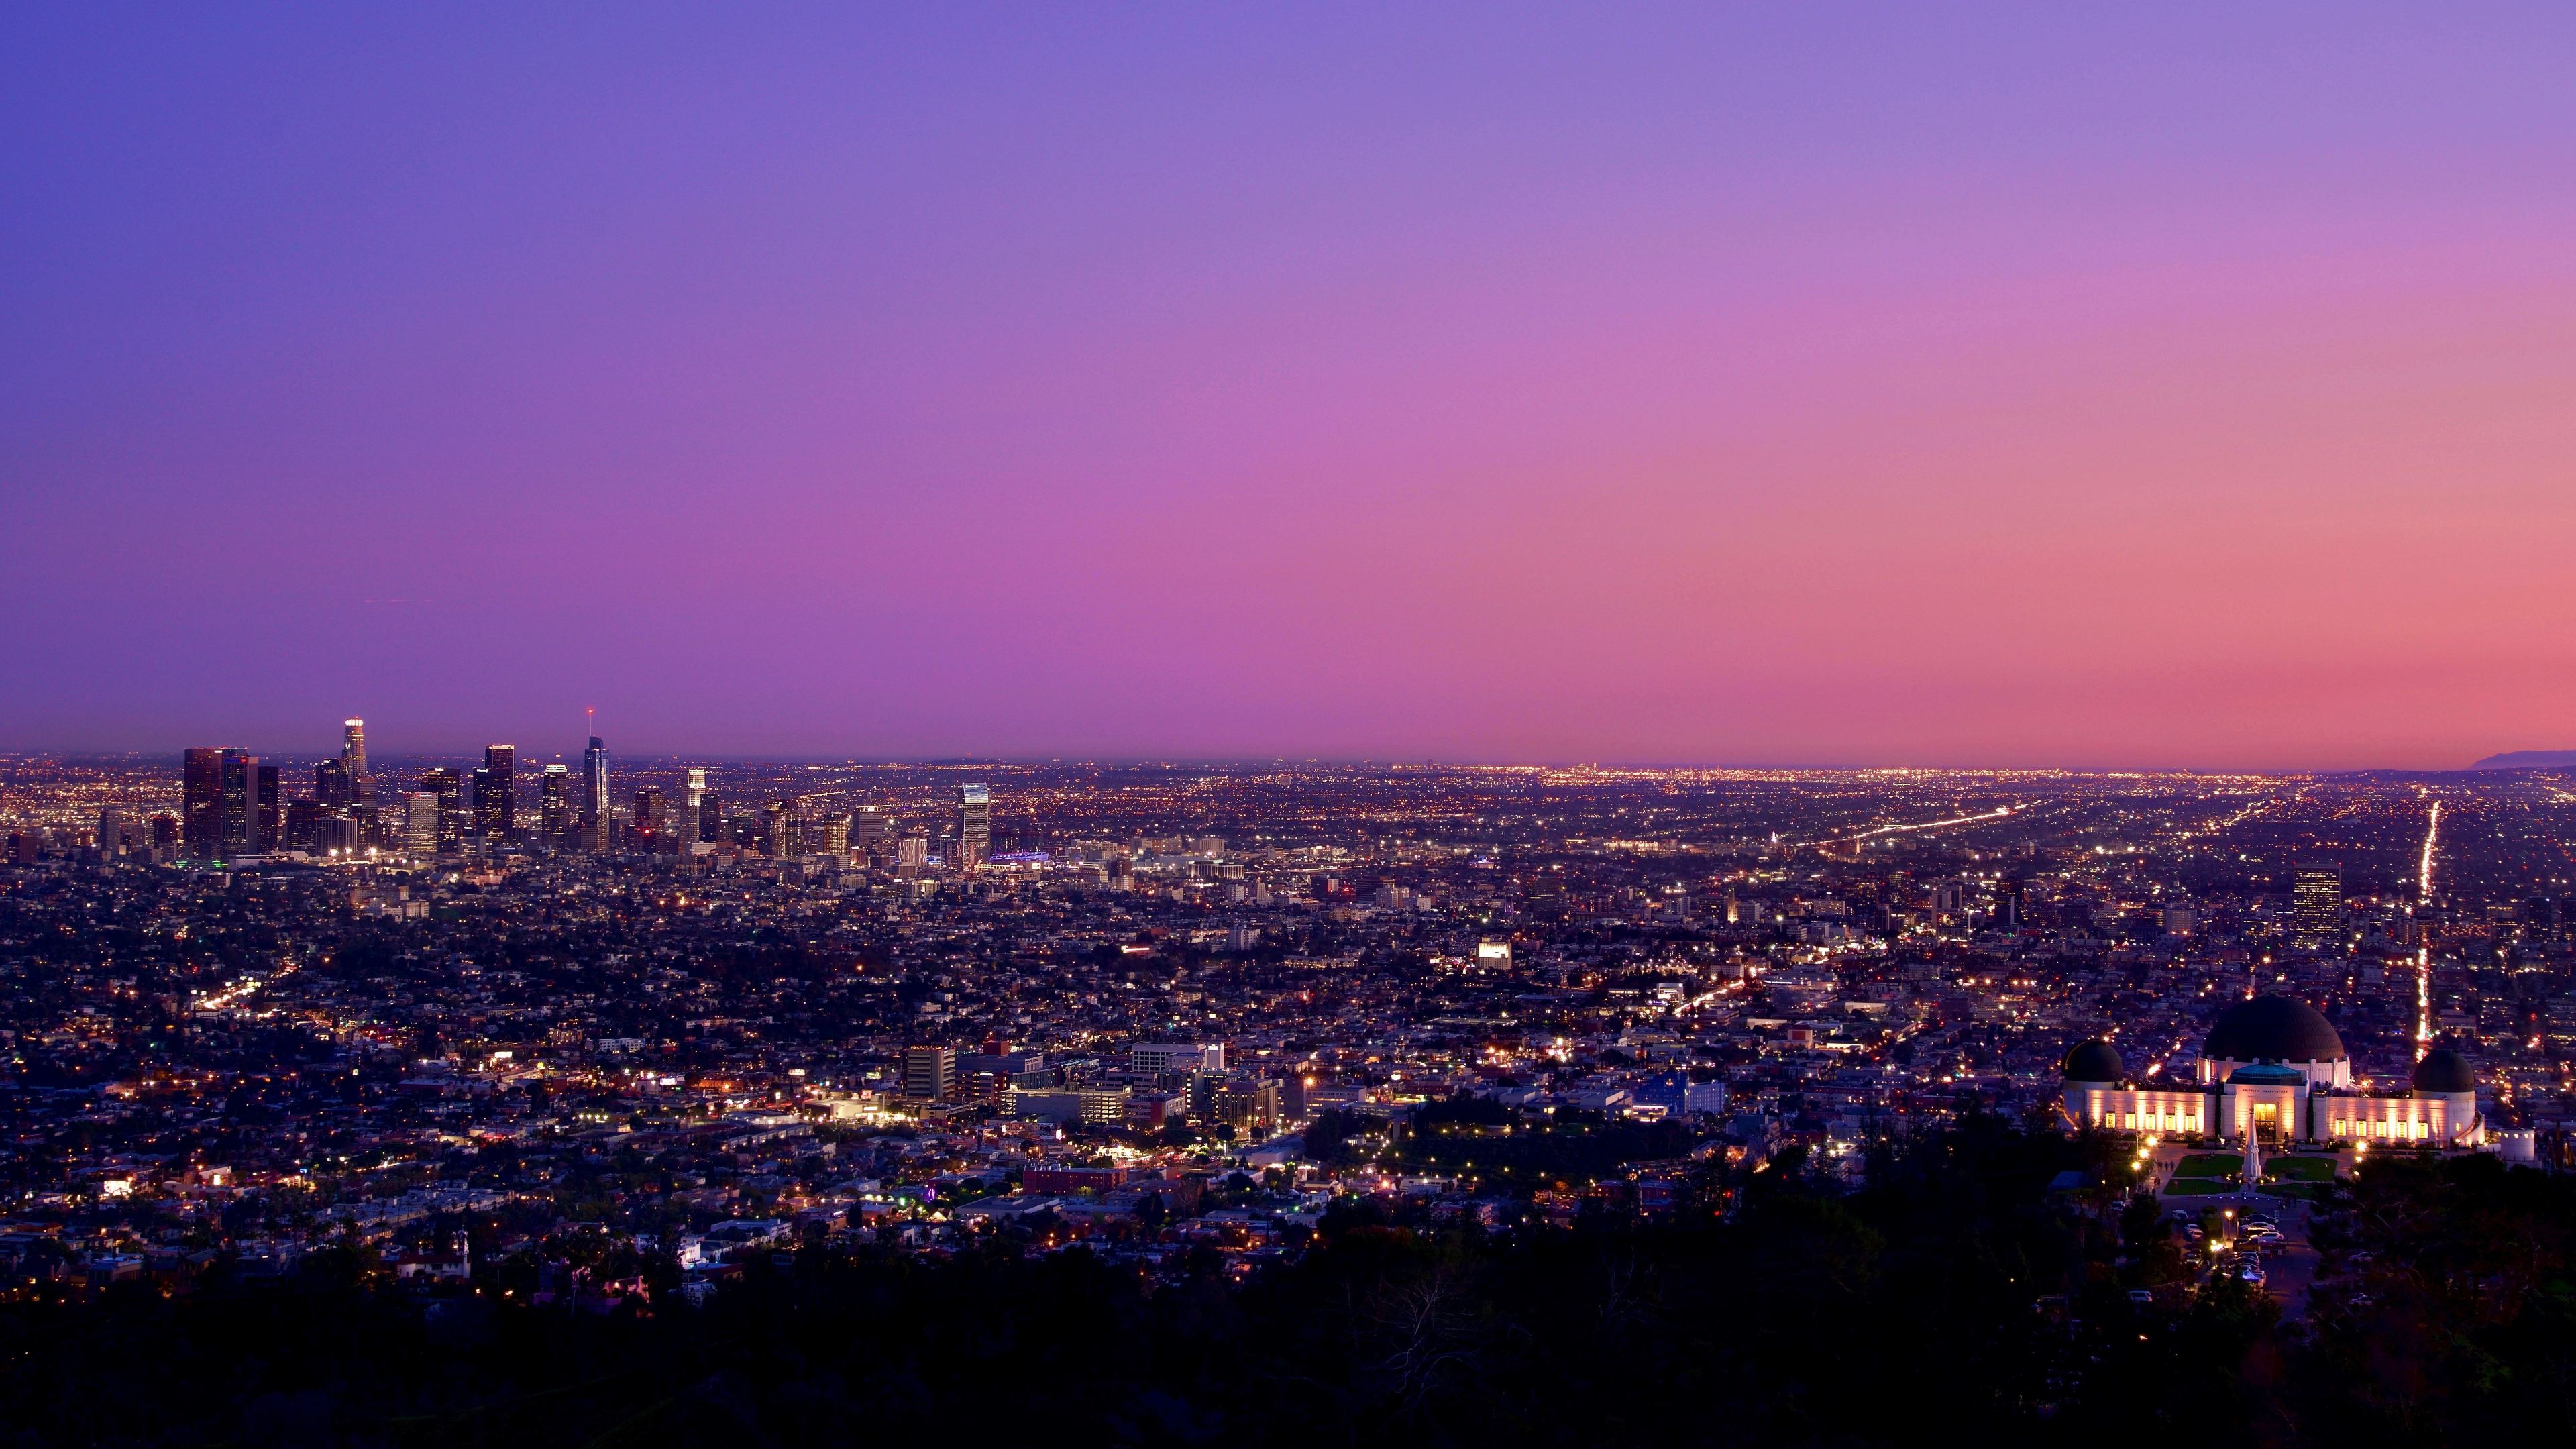 3840x2160 Los Angeles at Night Pink Sky 4K Wallpaper, HD City 4K